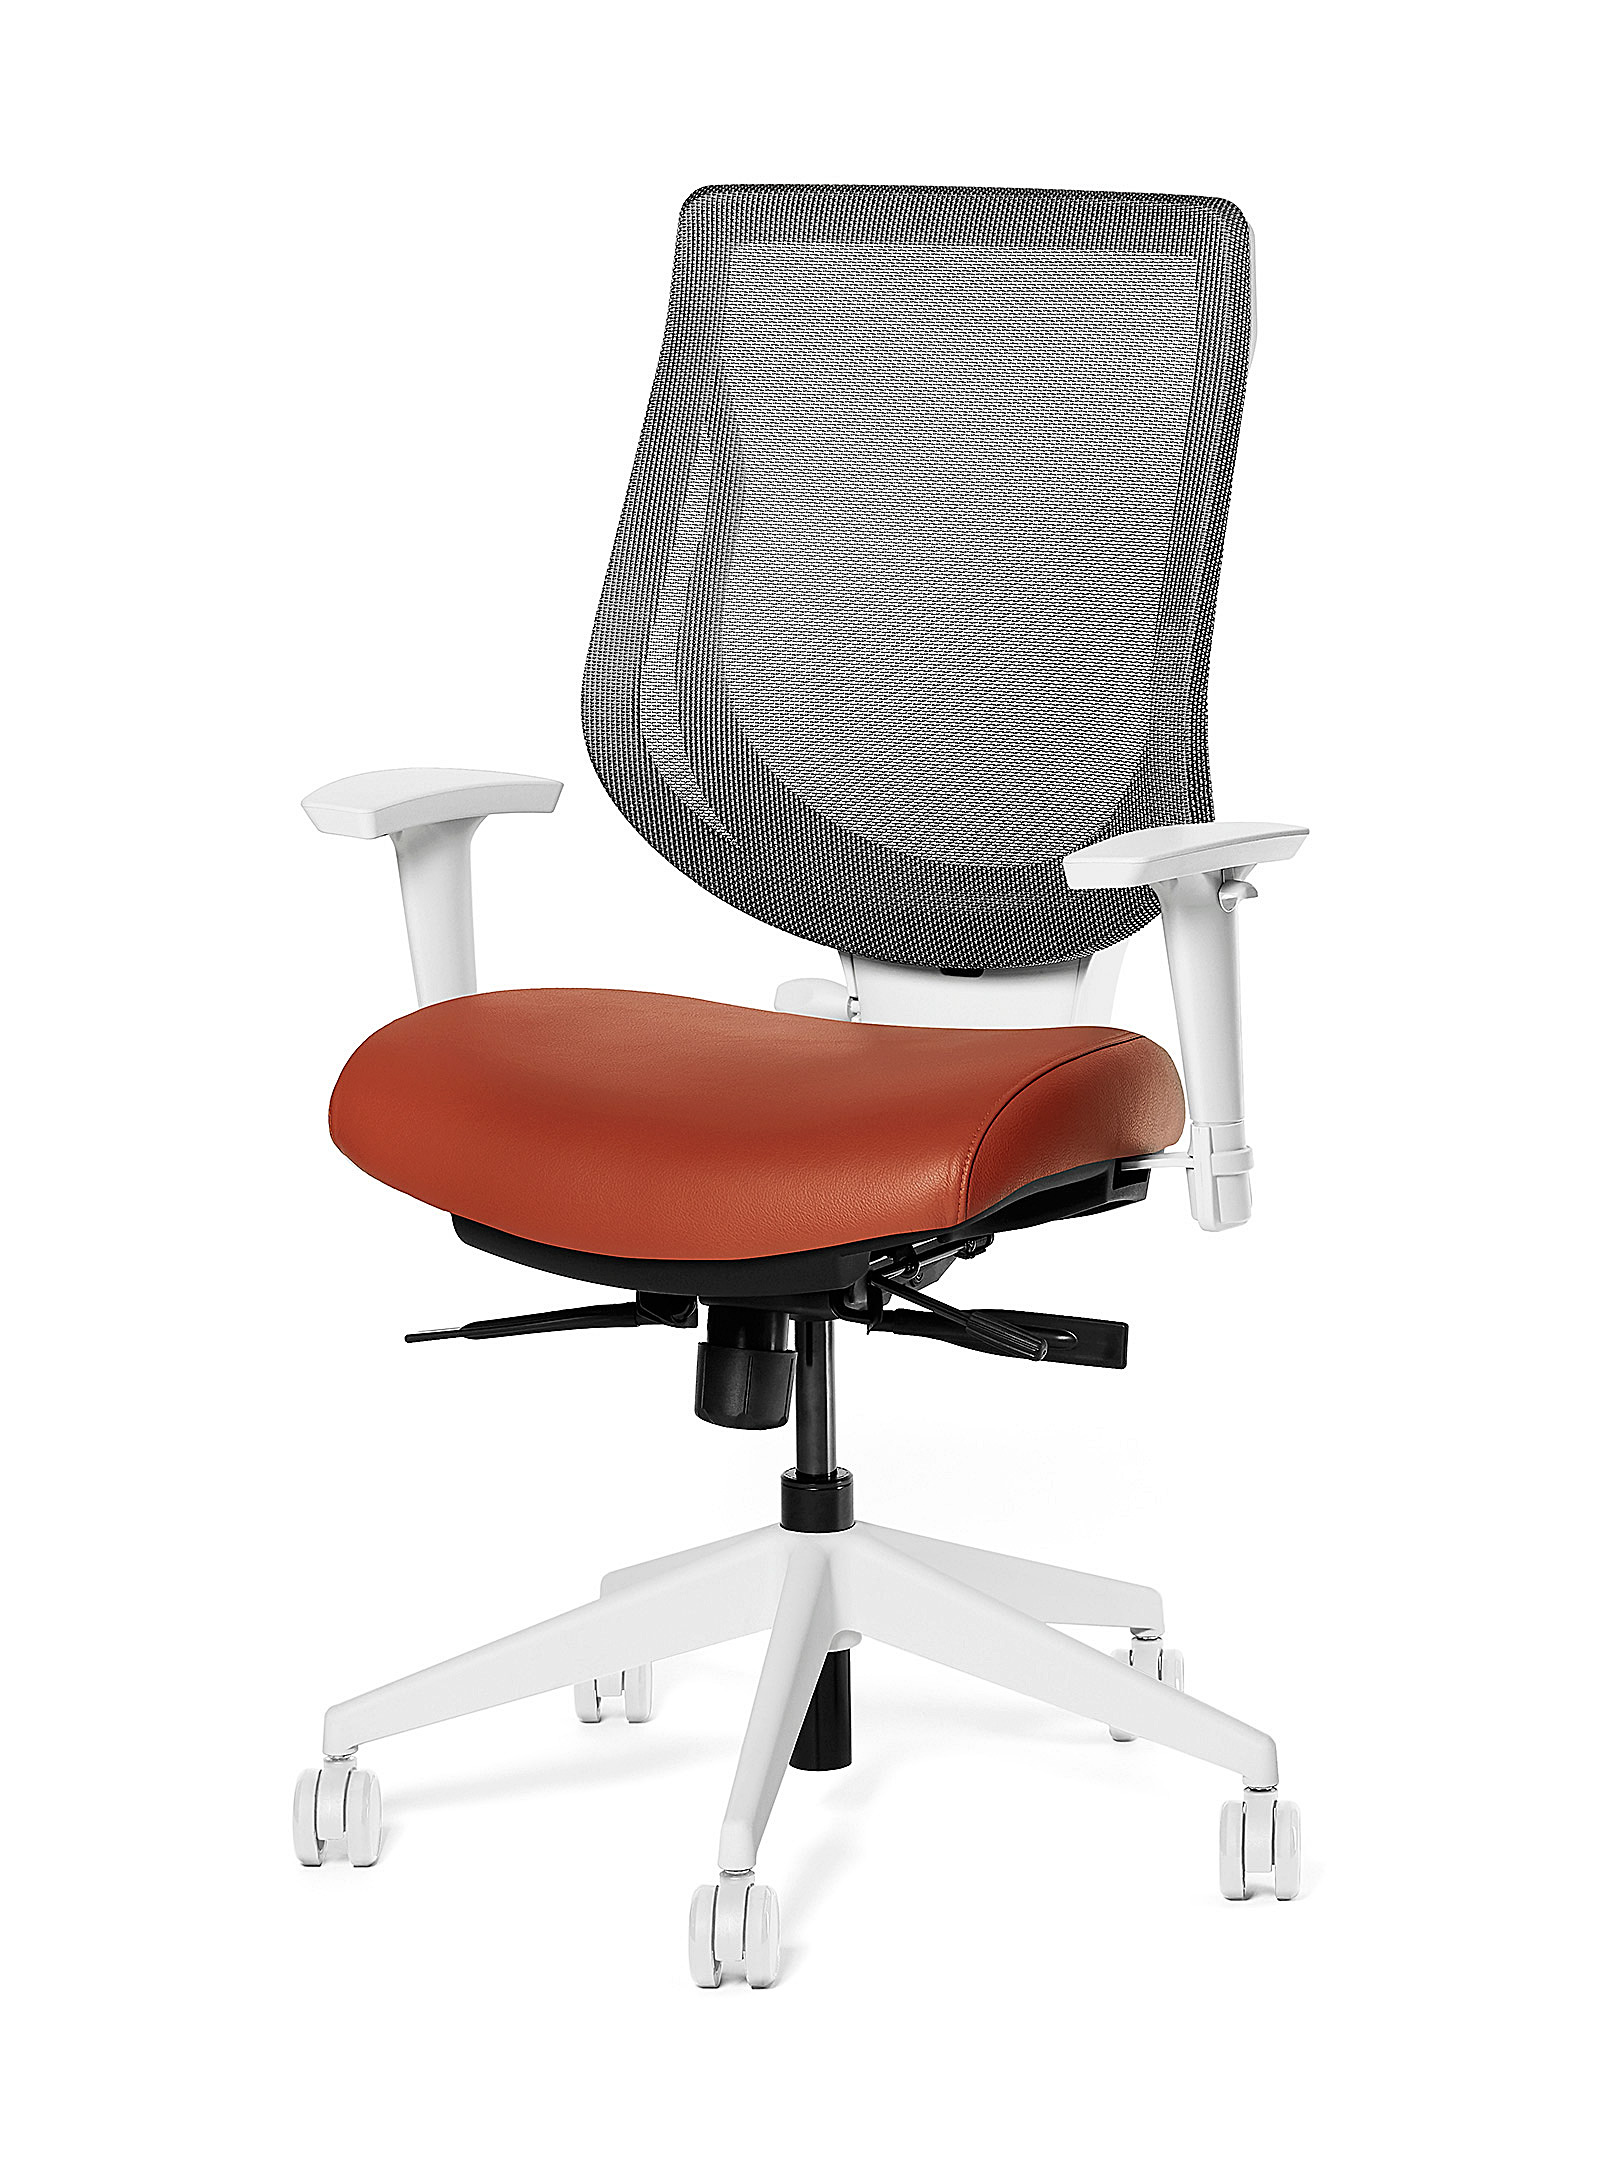 Ergonofis Youtoo Ergonomic Chair With Leather Seat White Base In Dark Orange